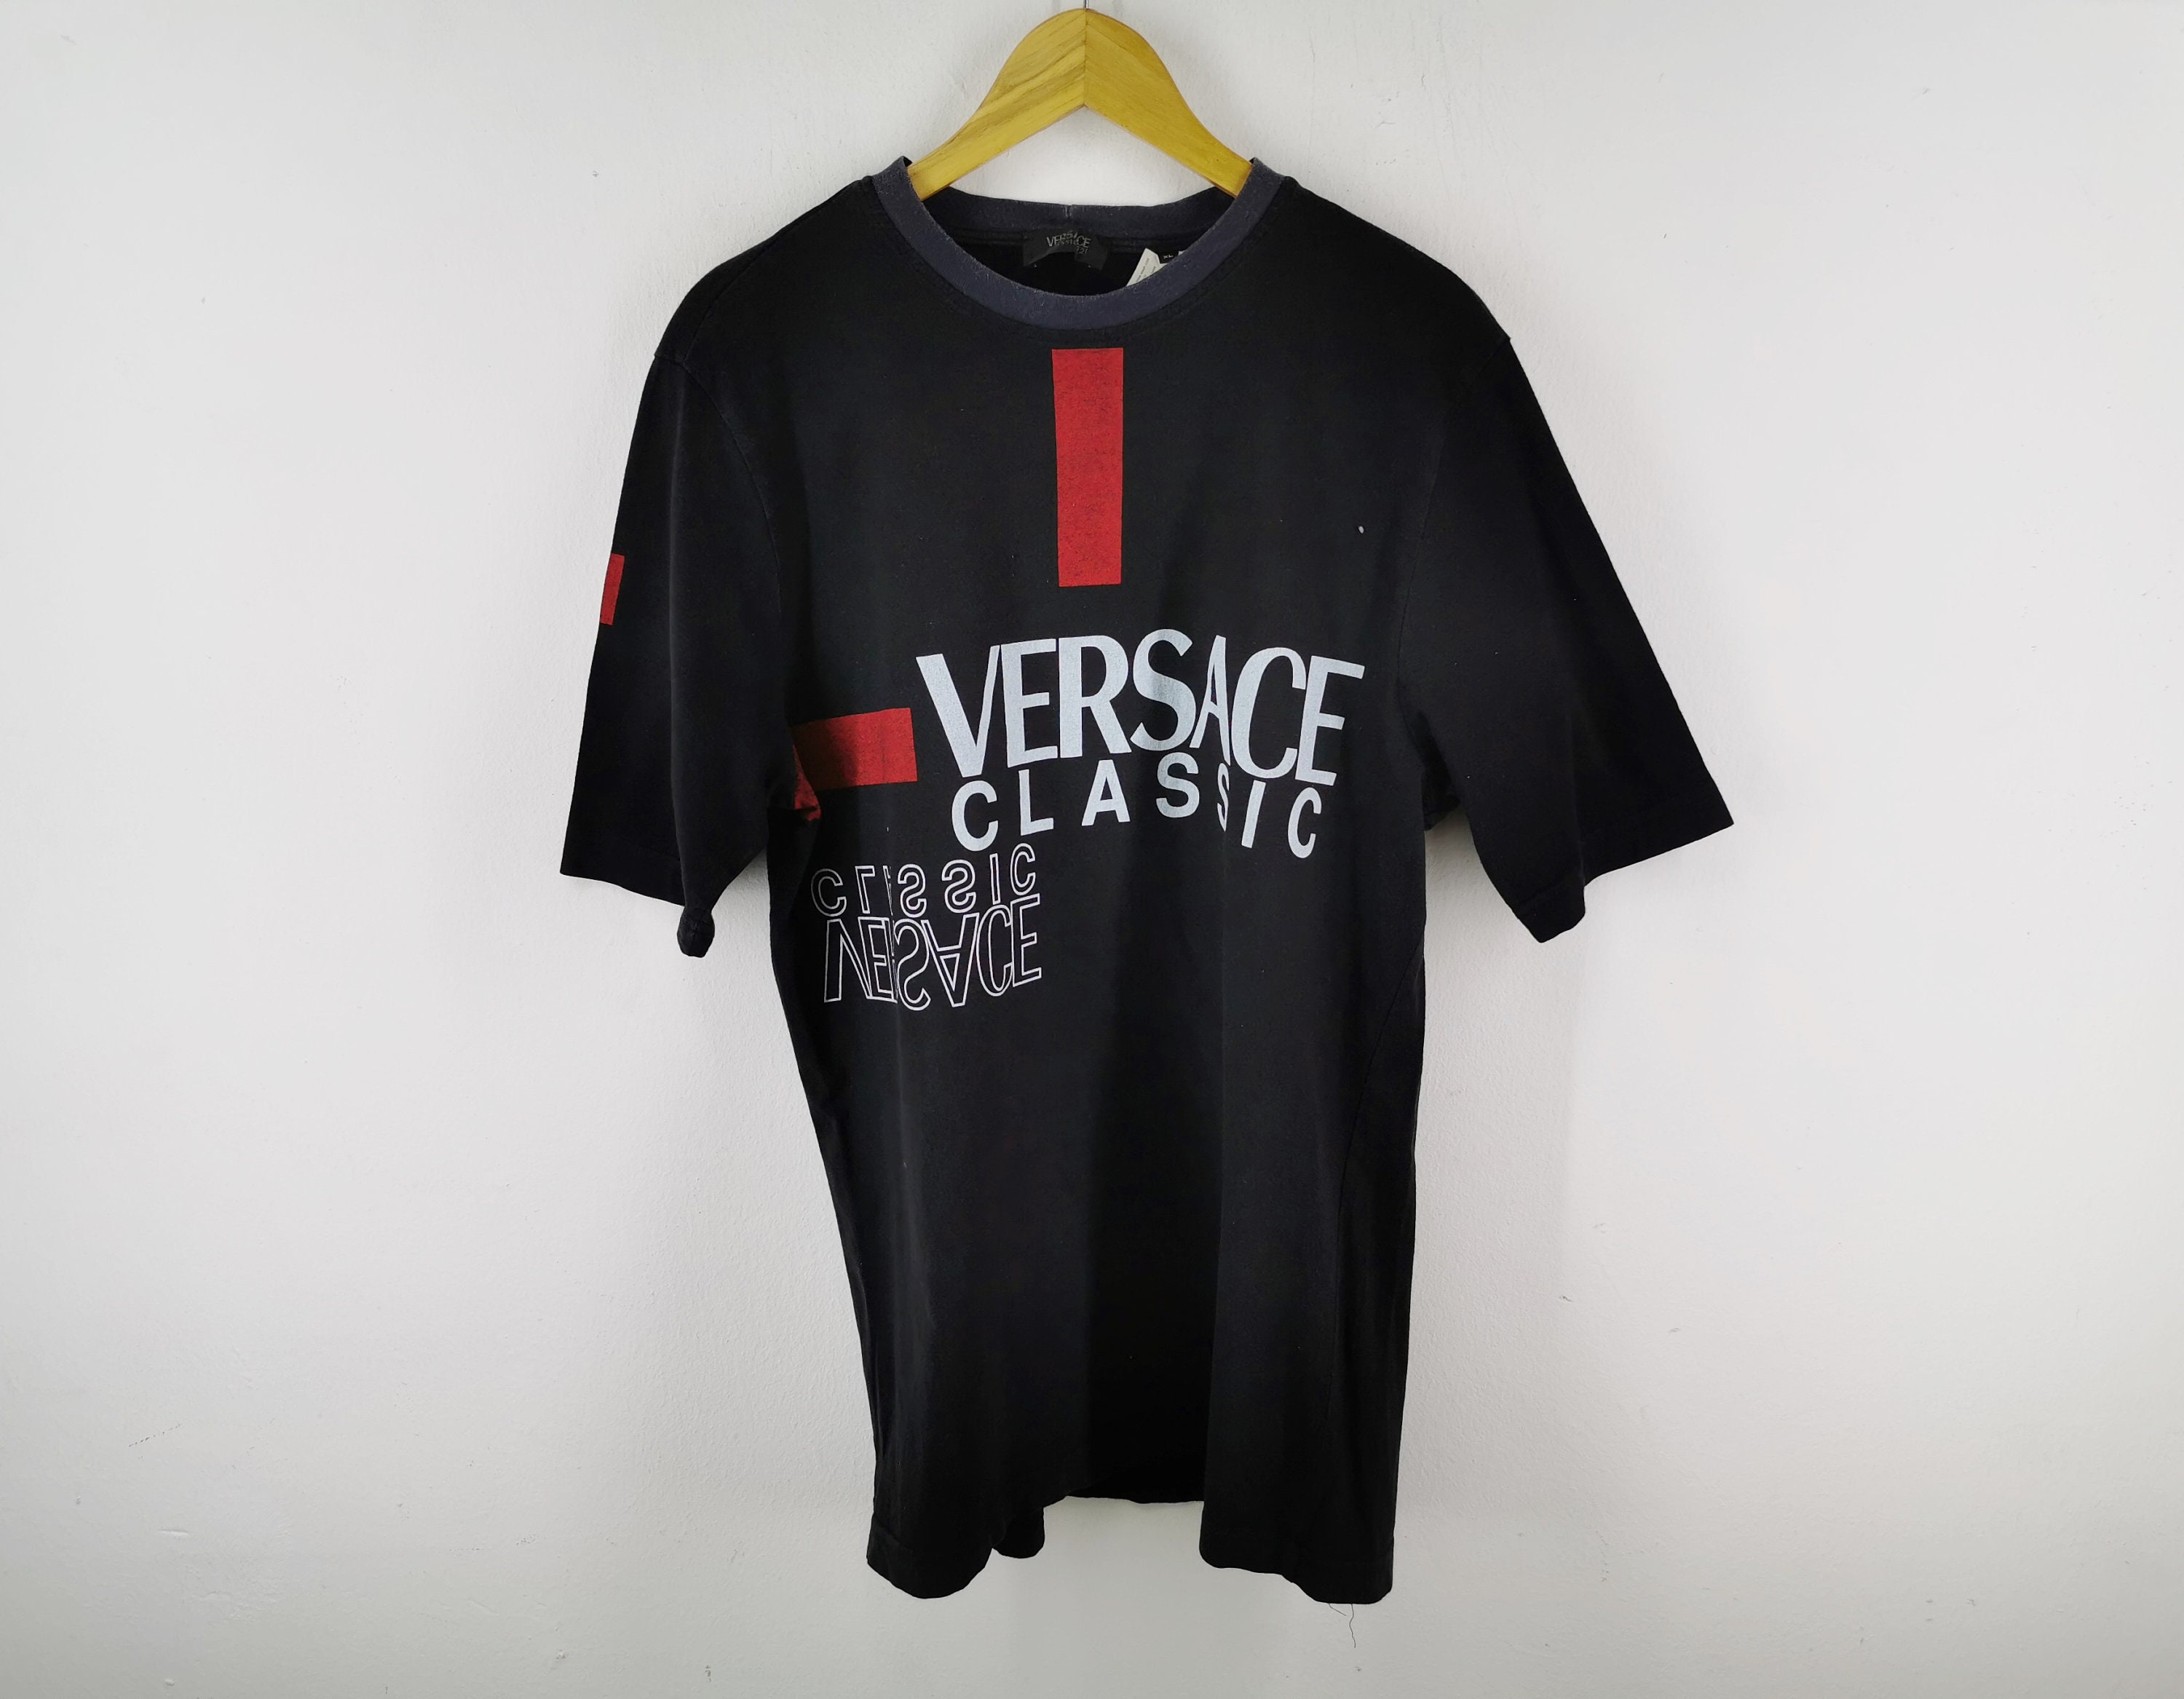 Versace Classic Shirt Vintage Versace Classic Shirt Versace | Etsy